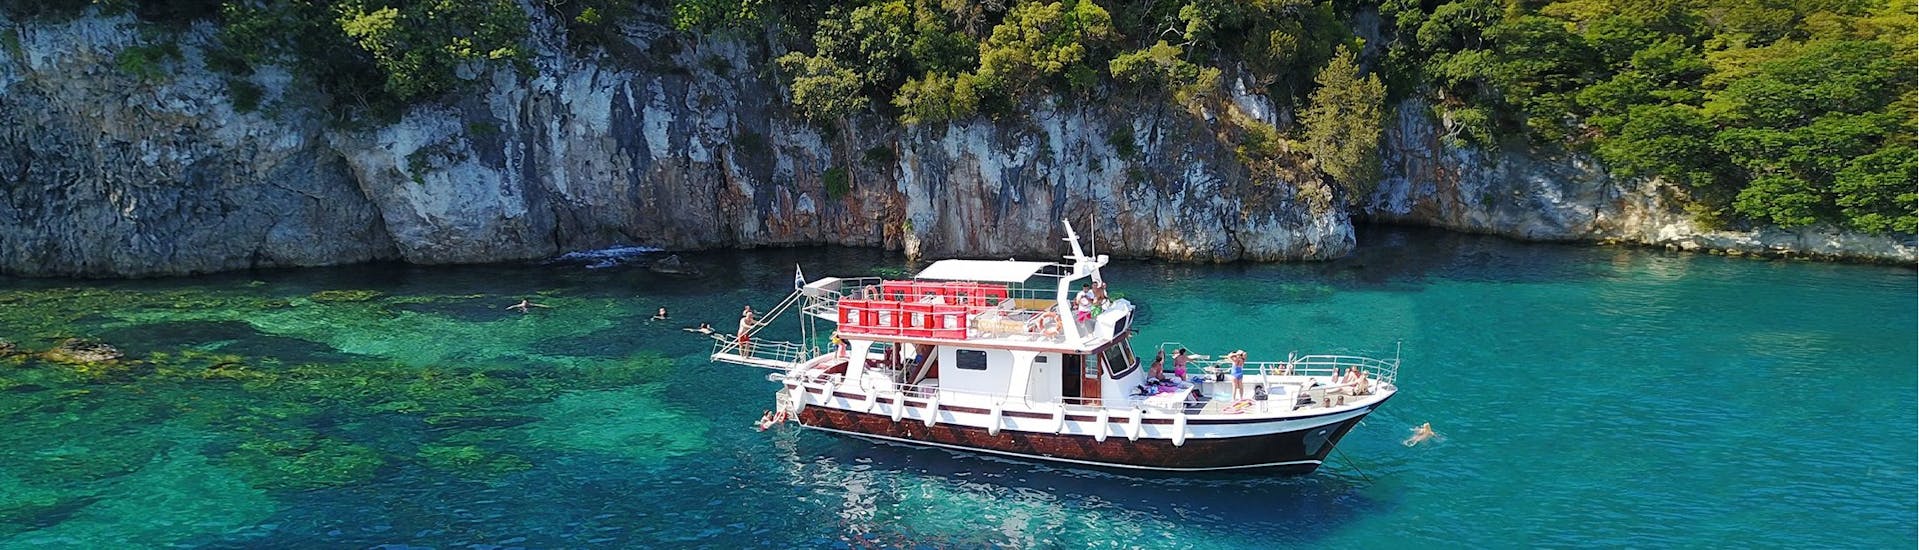 Gita in barca dalla spiaggia di Agia Kiriaki alle baie di Kleftiko e Gerakas.